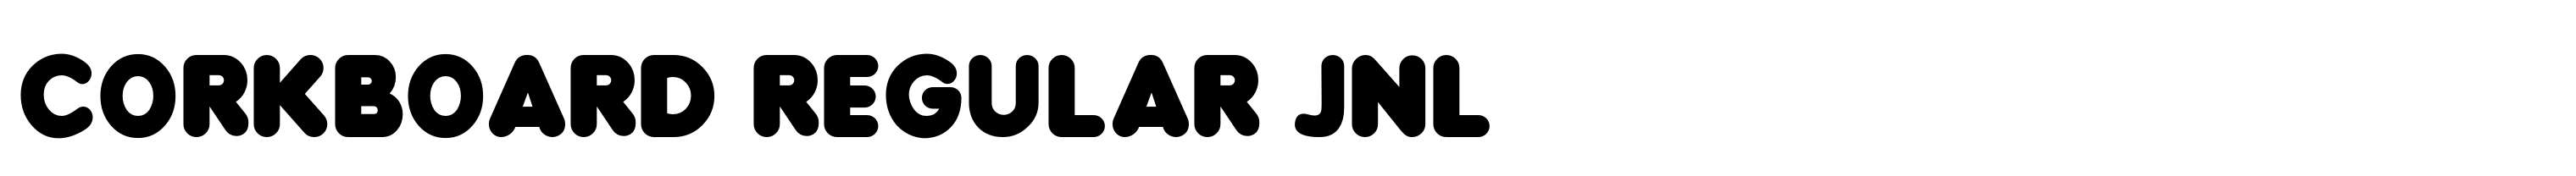 Corkboard Regular JNL